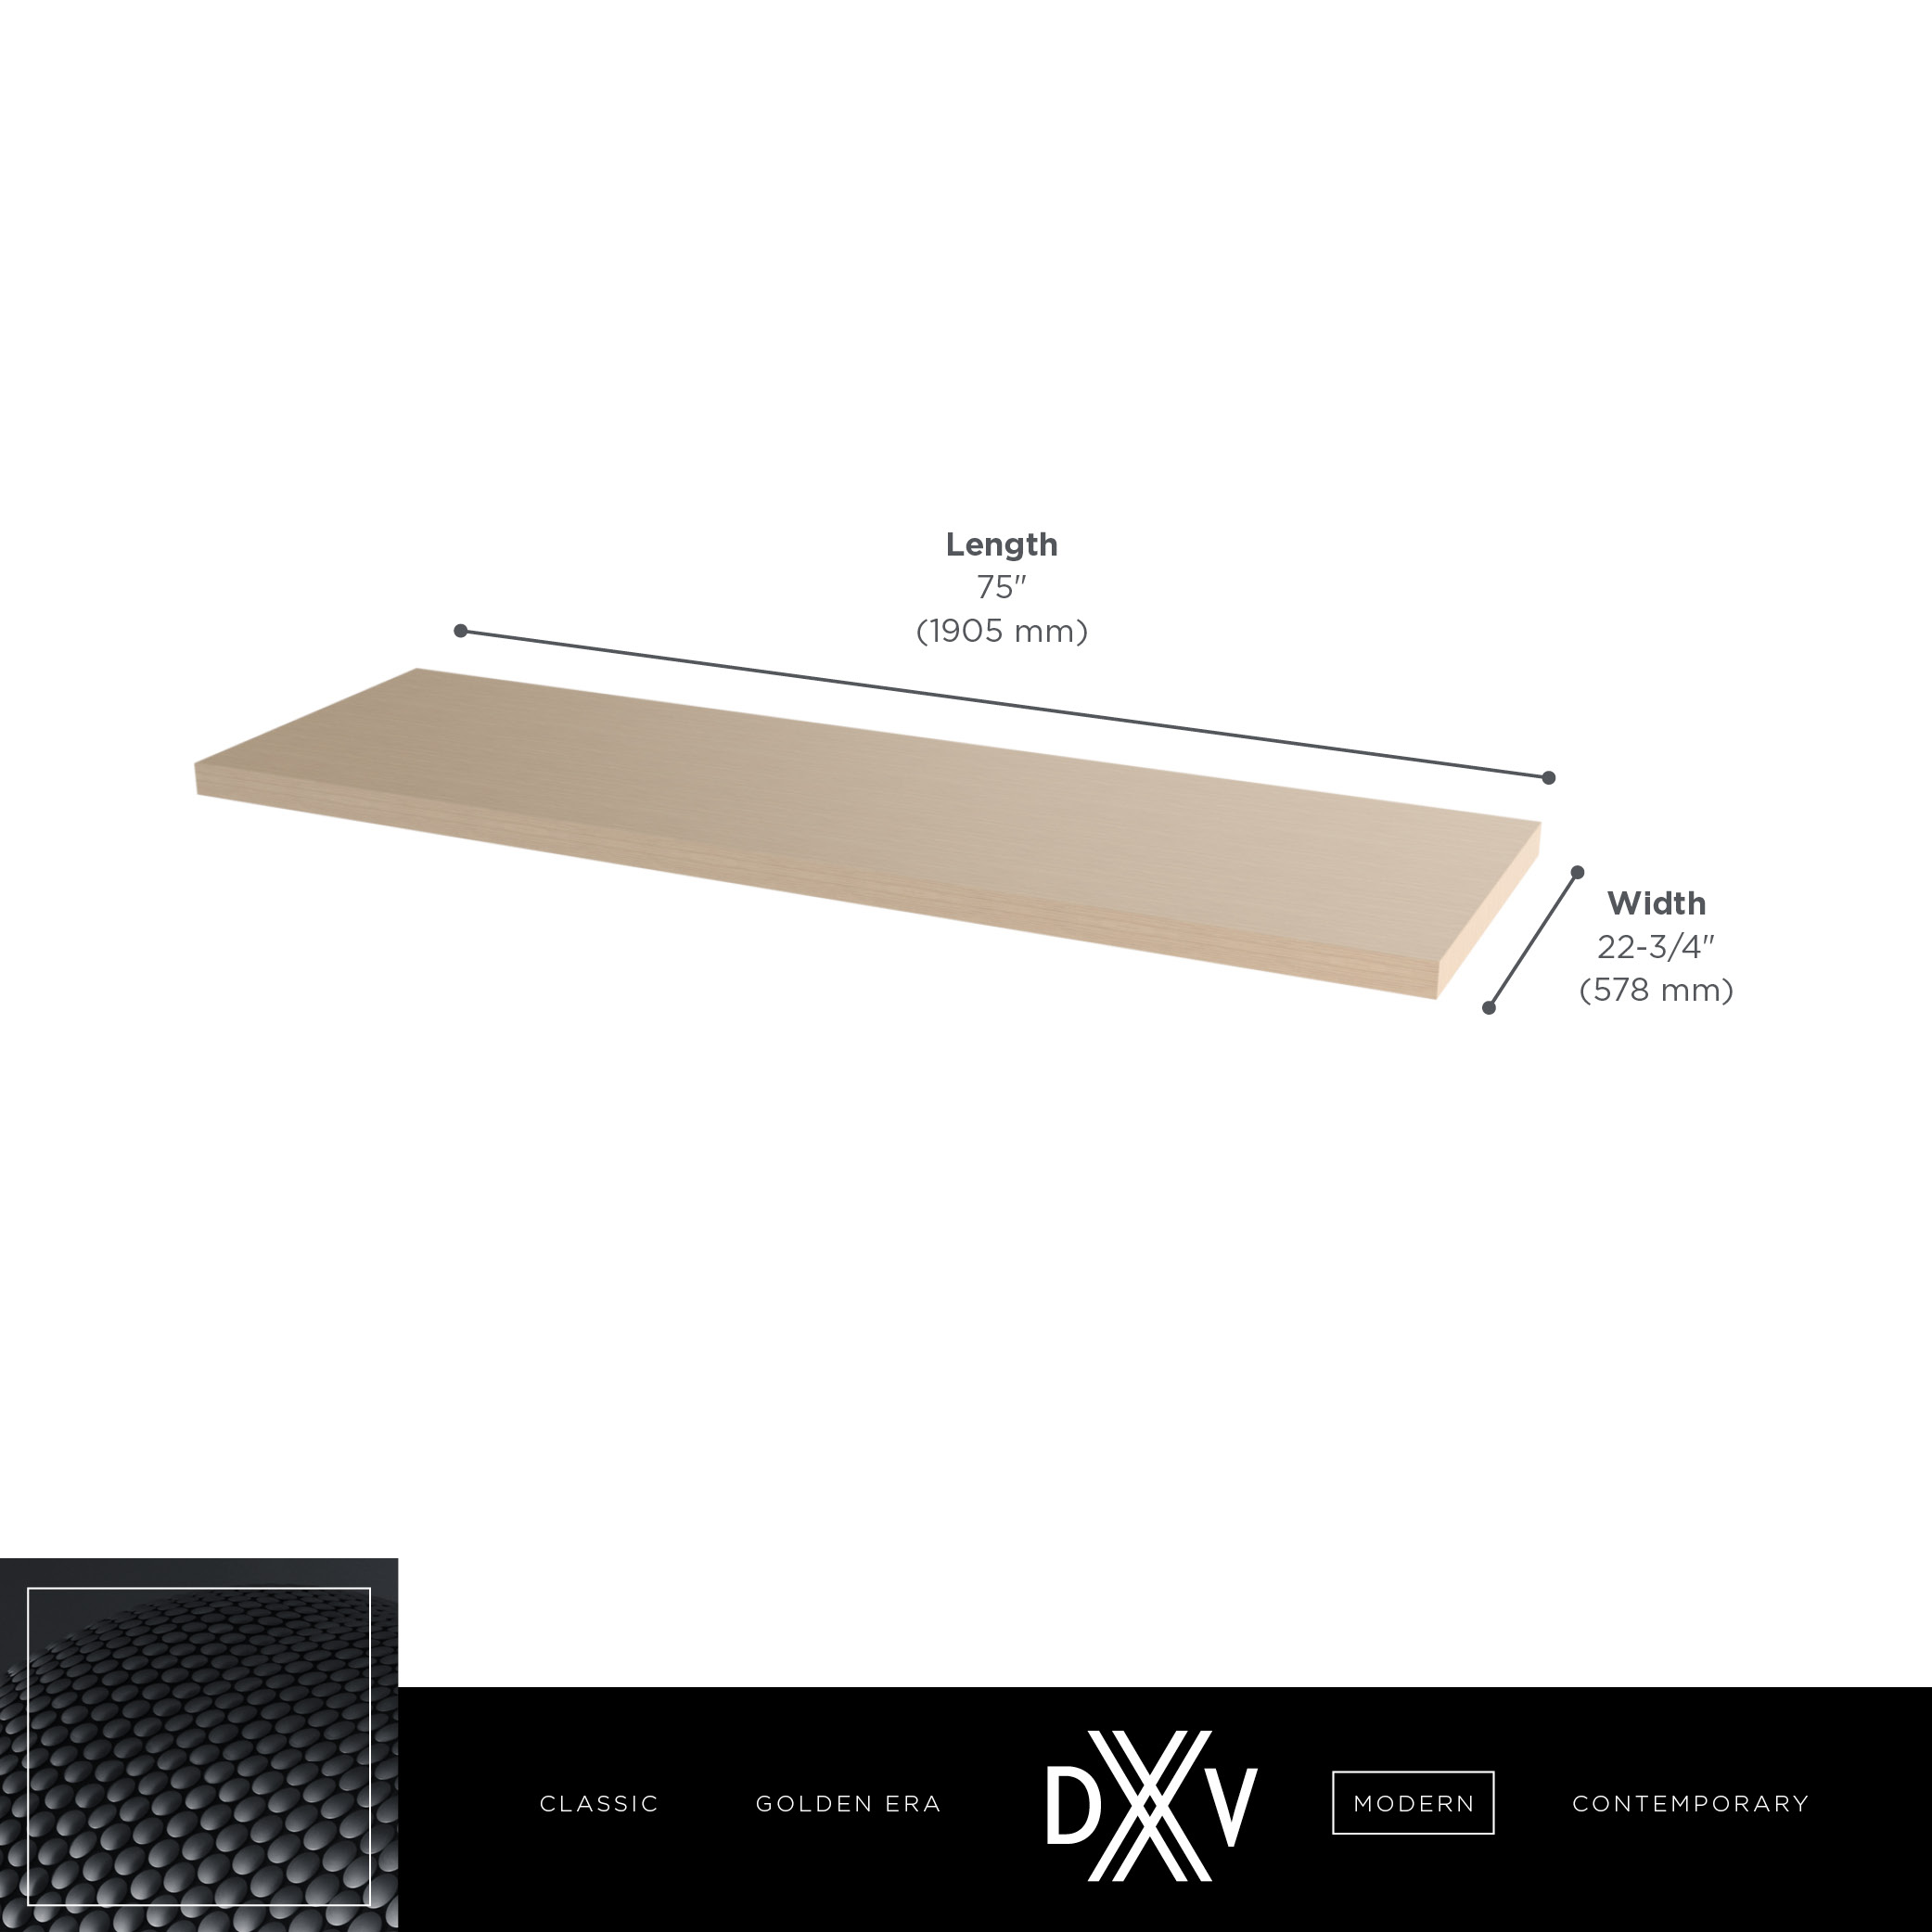 DXV Modulus® 75 in. Countertop Slab